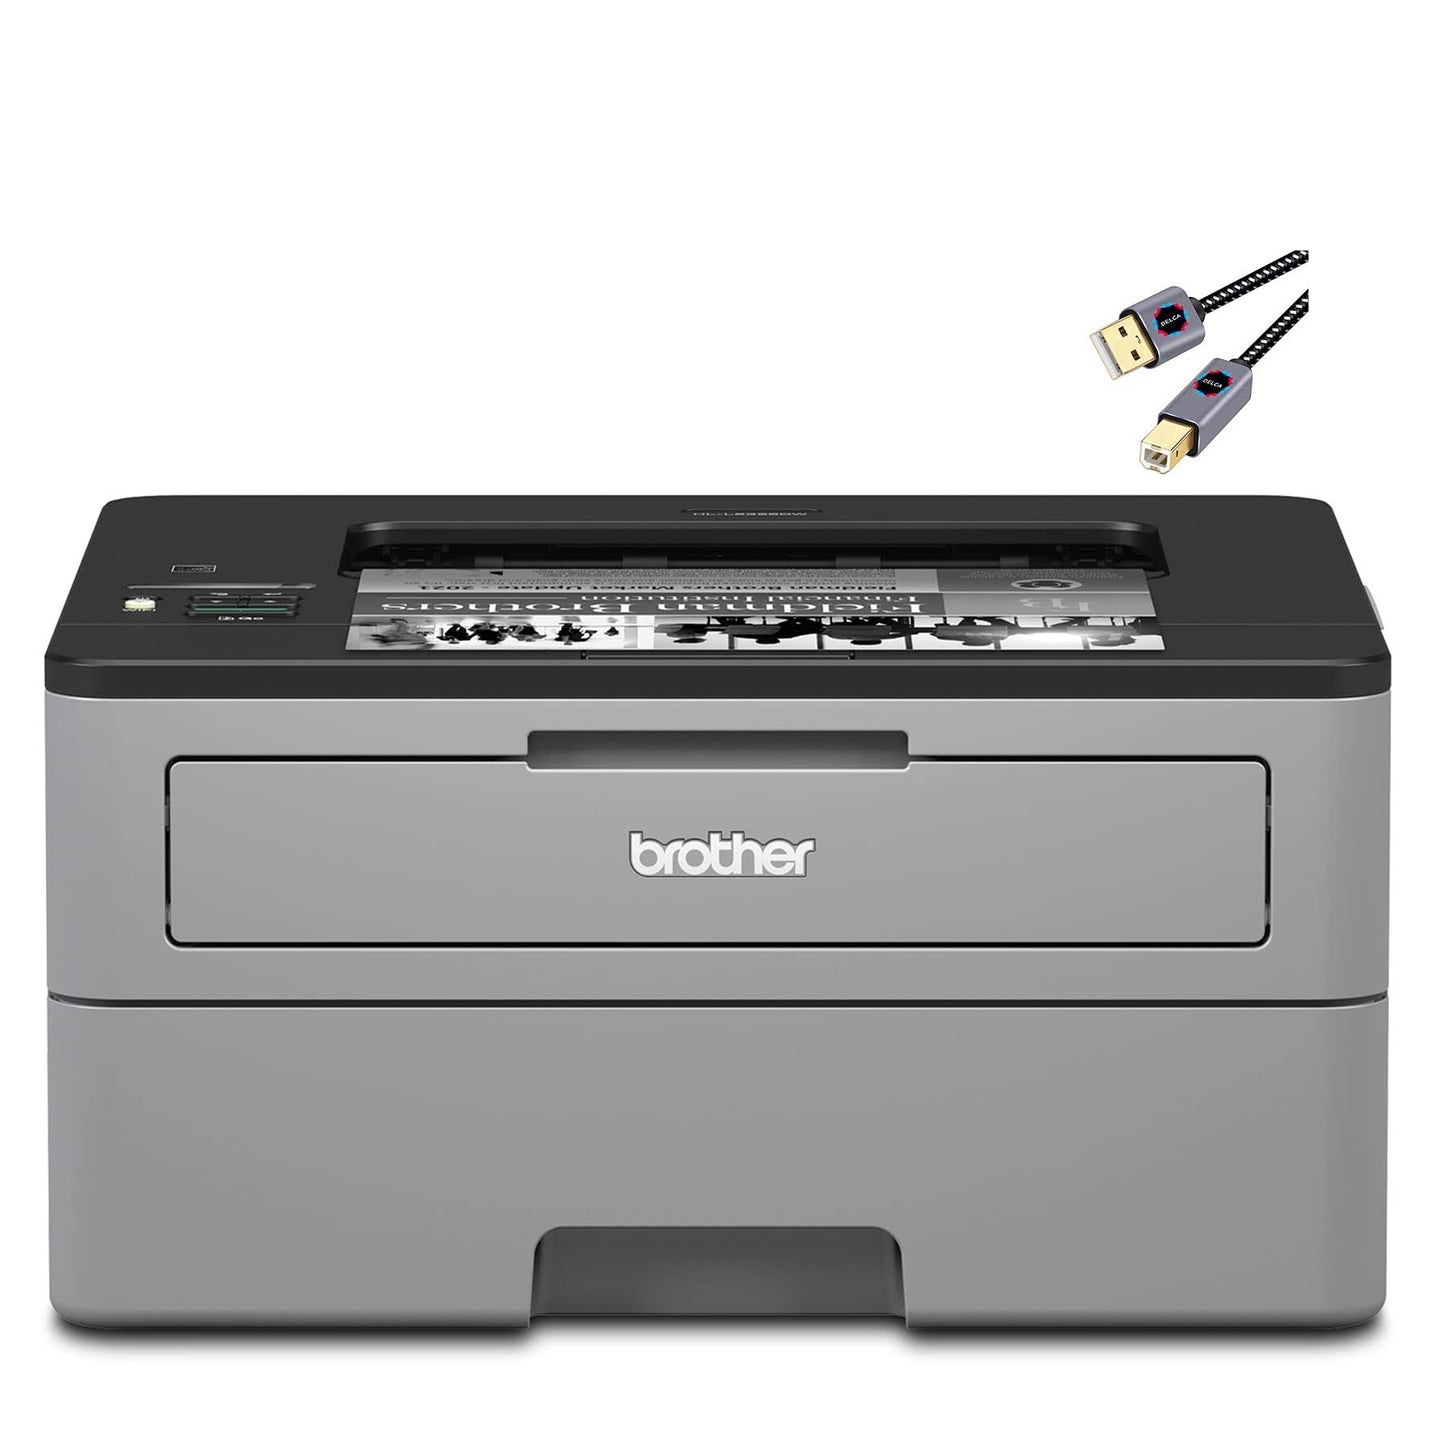 Hl-L2325dw Monochrome Laser Printer, Wireless Networking & Duplex Printing